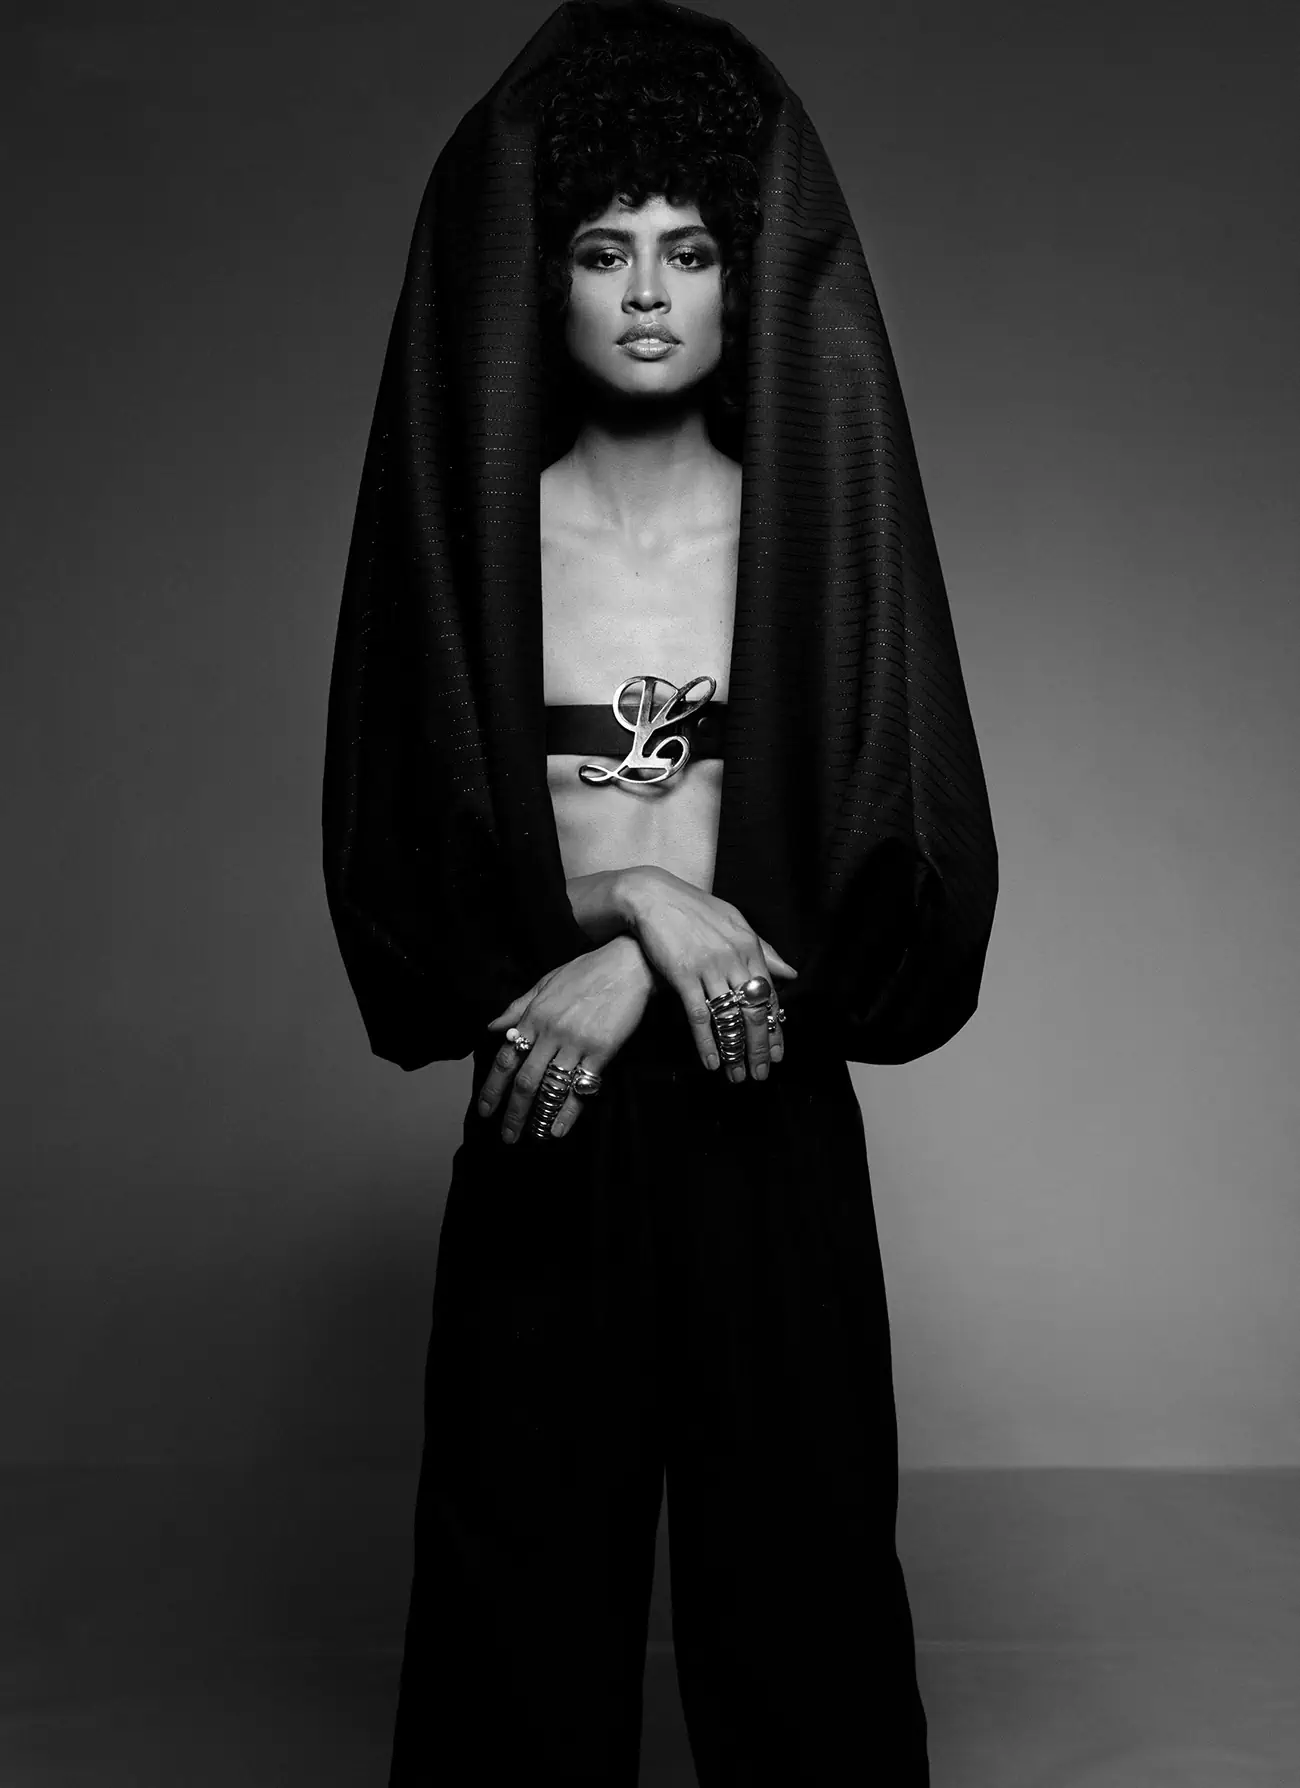 Luz Pavon covers Vogue Mexico August 2023 by Jean-Baptiste Mondino